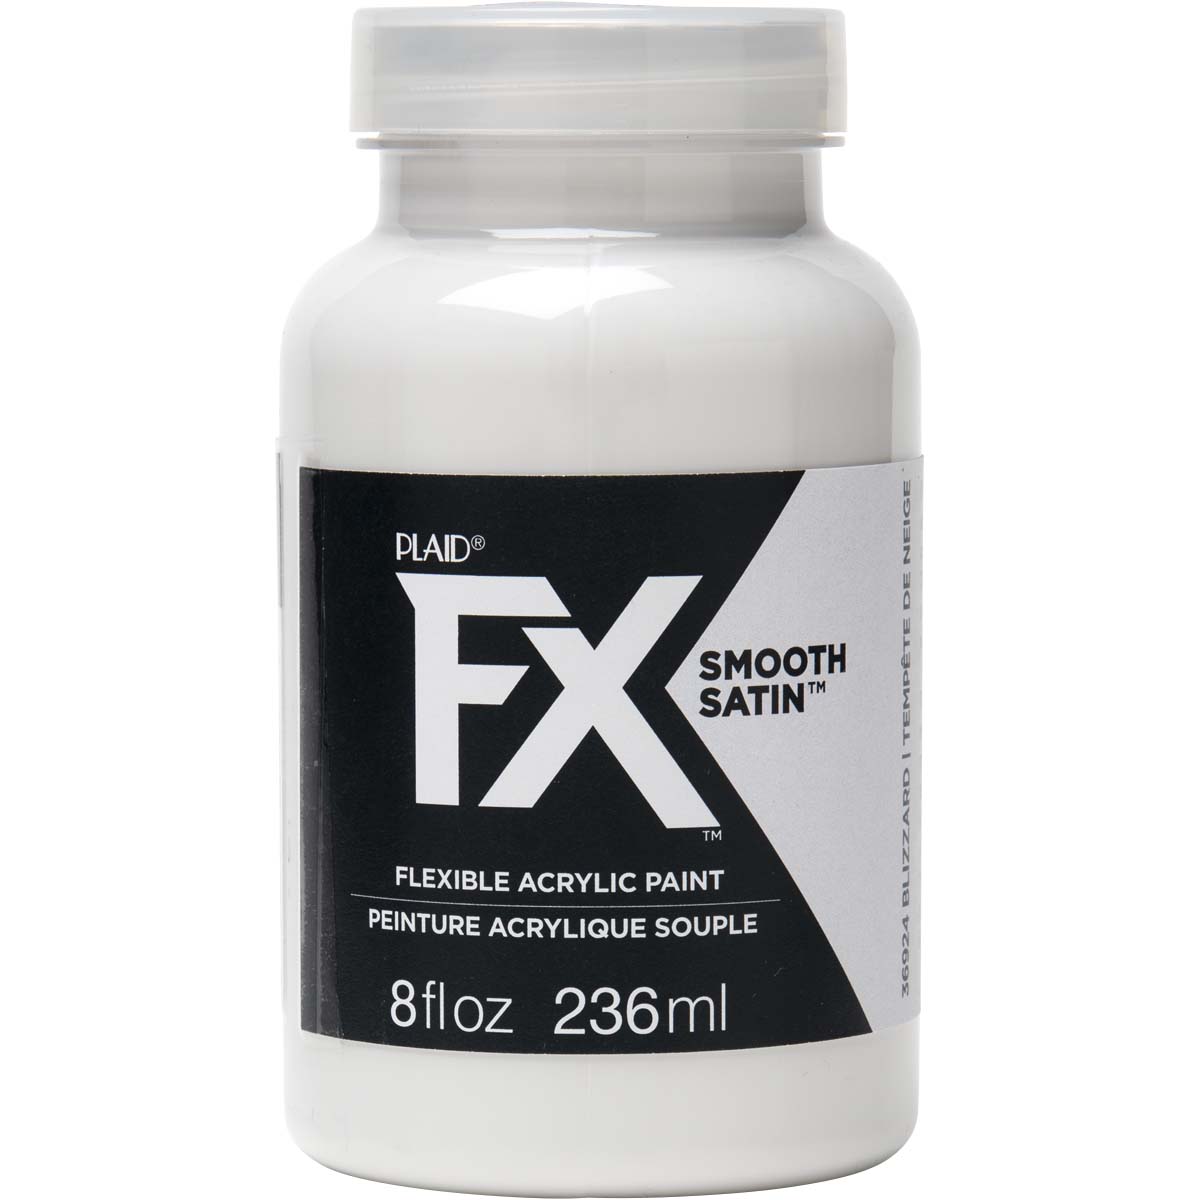 PlaidFX Smooth Satin Flexible Acrylic Paint - Blizzard, 8 oz. - 36924